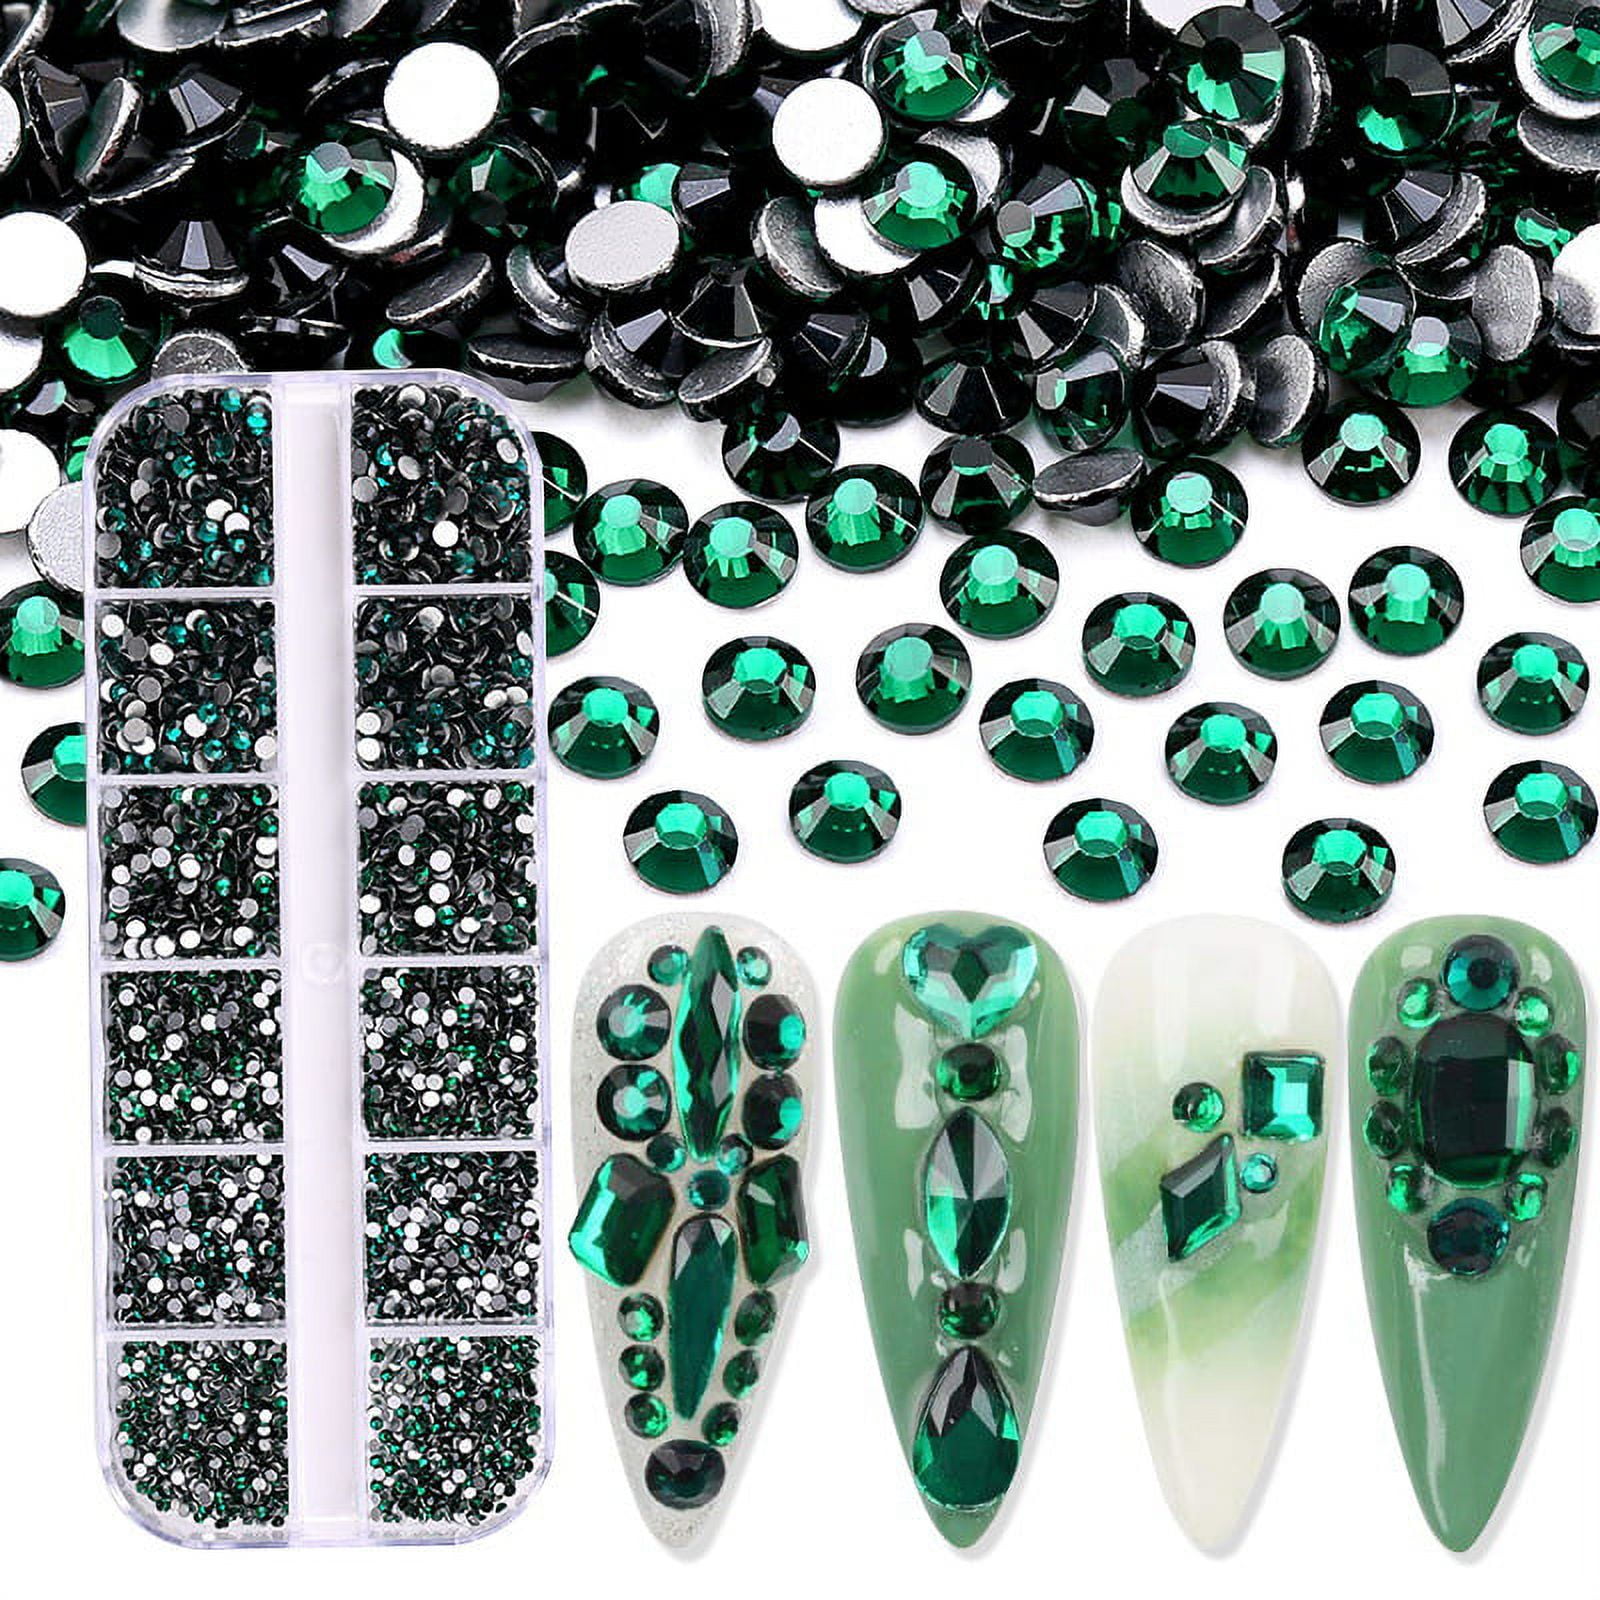 Claw Crystal Rhinestones 50pcs Sew on Rhinestone Dark Green Glass Crystals  Acrylic Gems Rhinestones Flatback for Diy Crafts Dress Clothes Shoes Bag  Decor price in Saudi Arabia,  Saudi Arabia